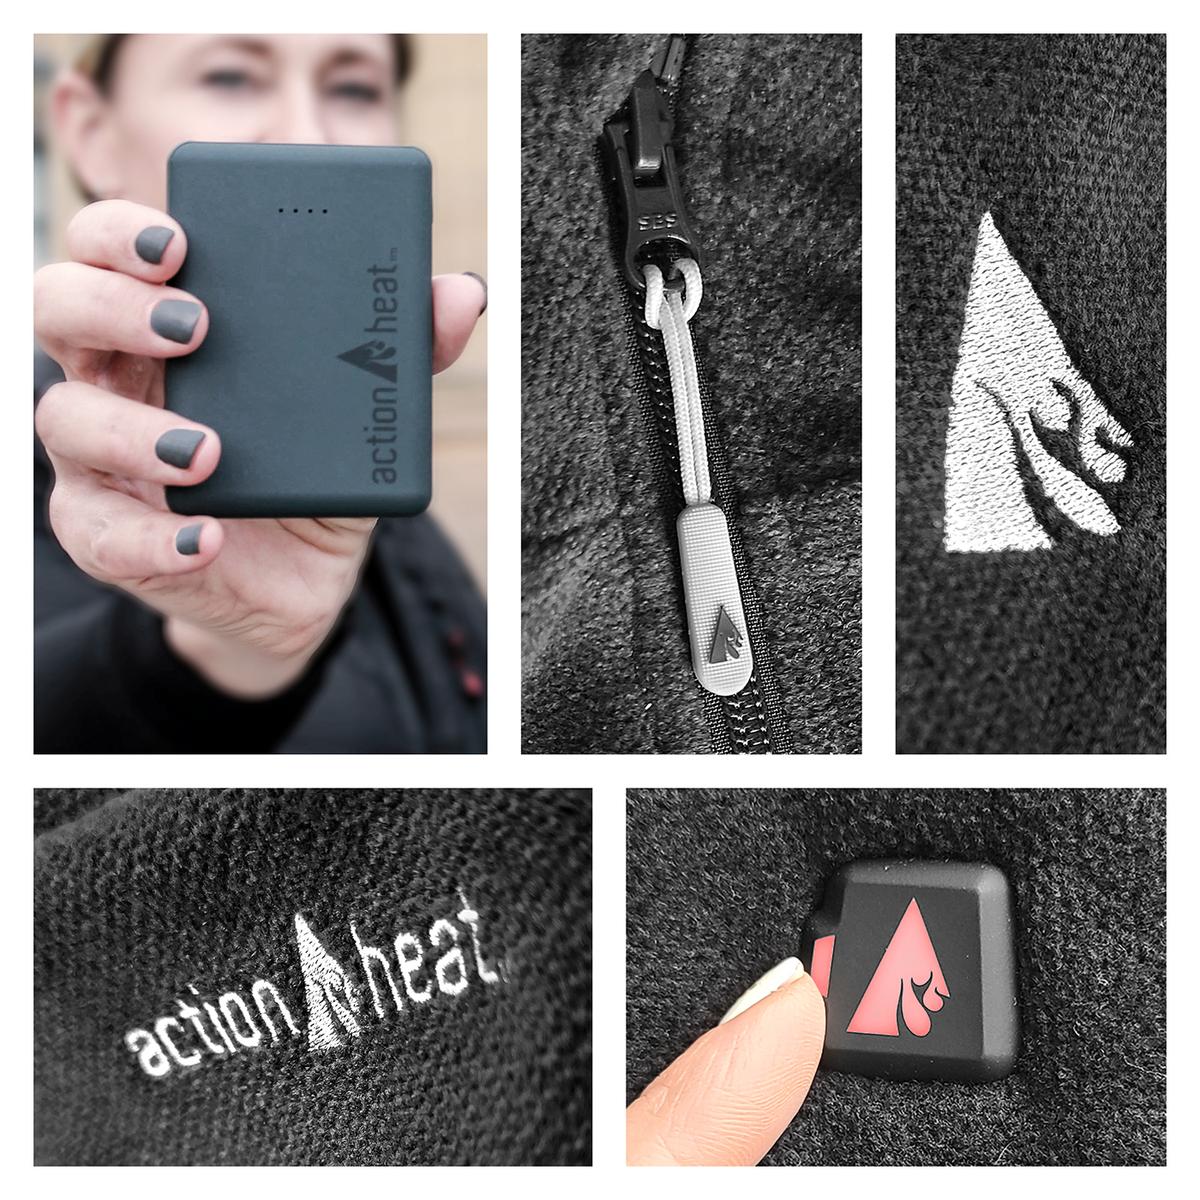 ActionHeat 5V Women's Performance Fleece Battery Heated Vest - Size